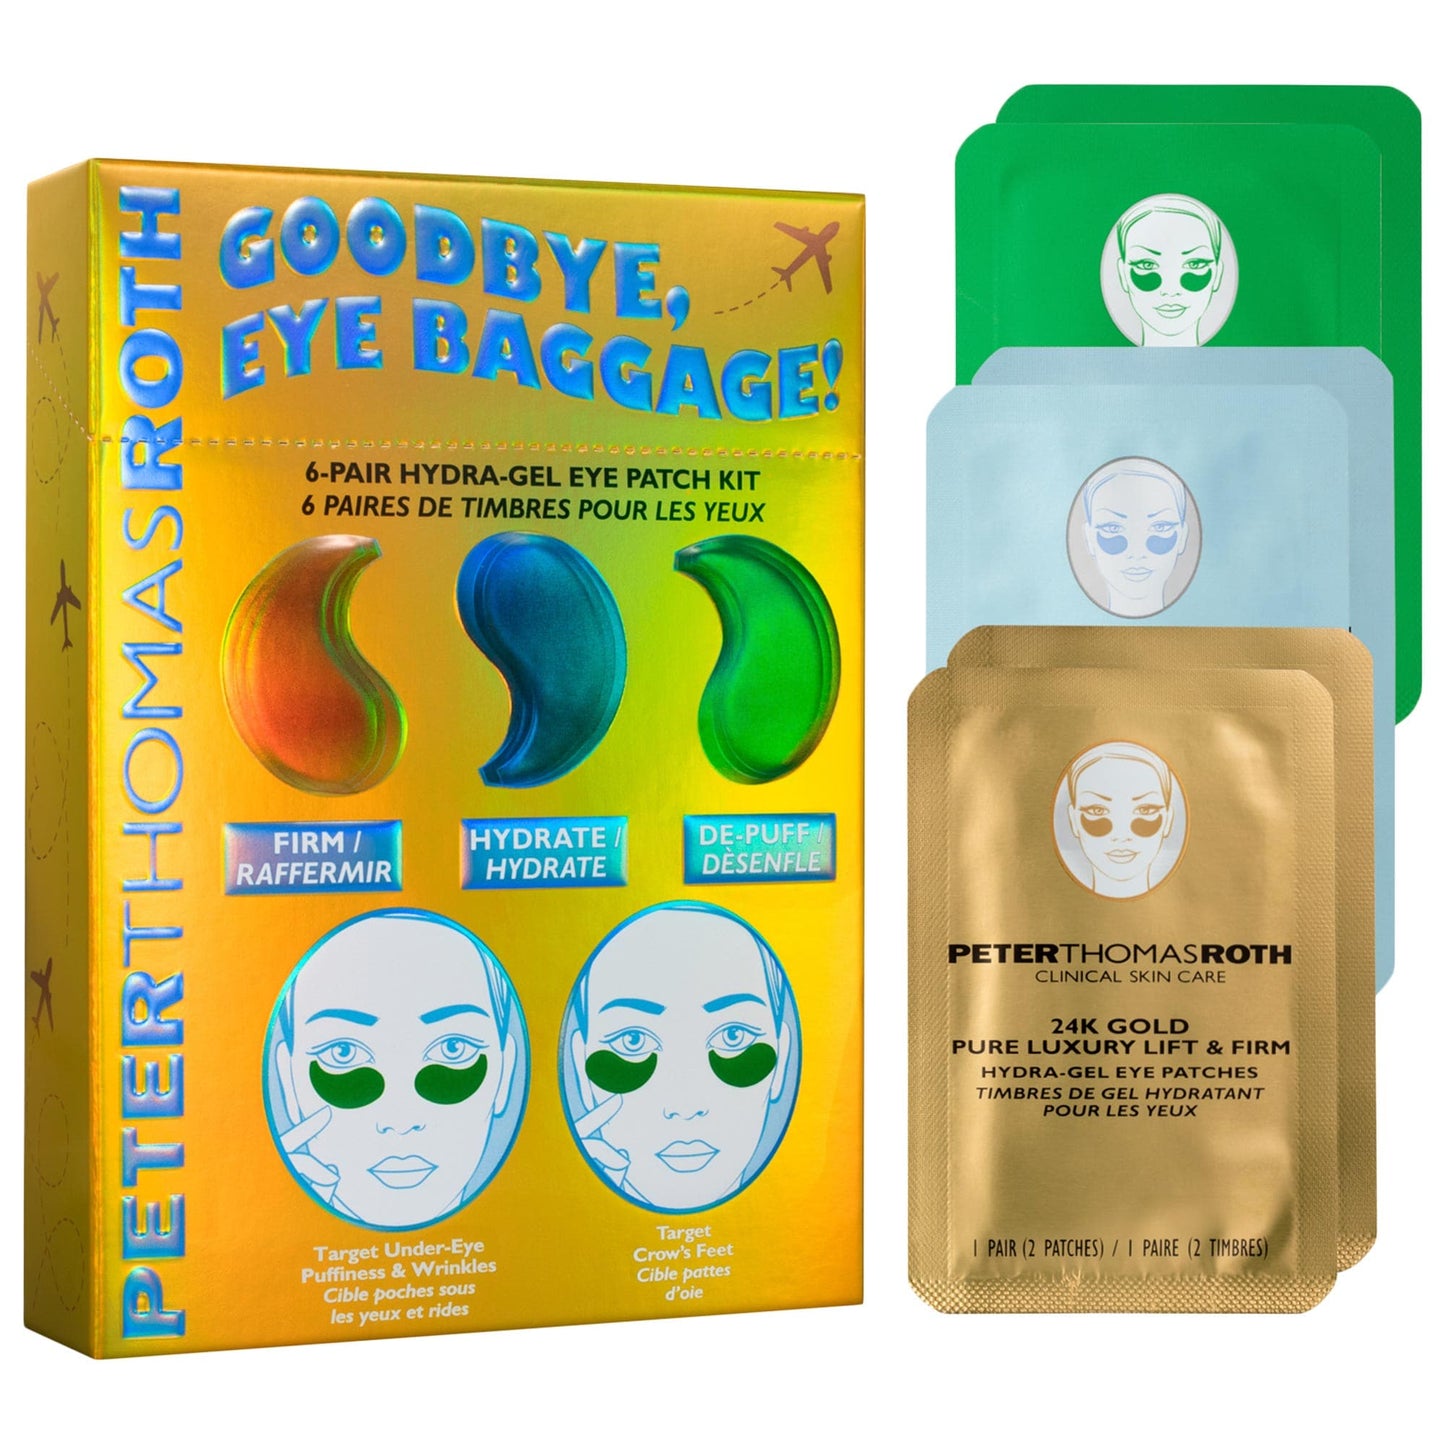 Goodbye, Eye Baggage! 6-Pair Hydra-Gel Eye Patch Kit